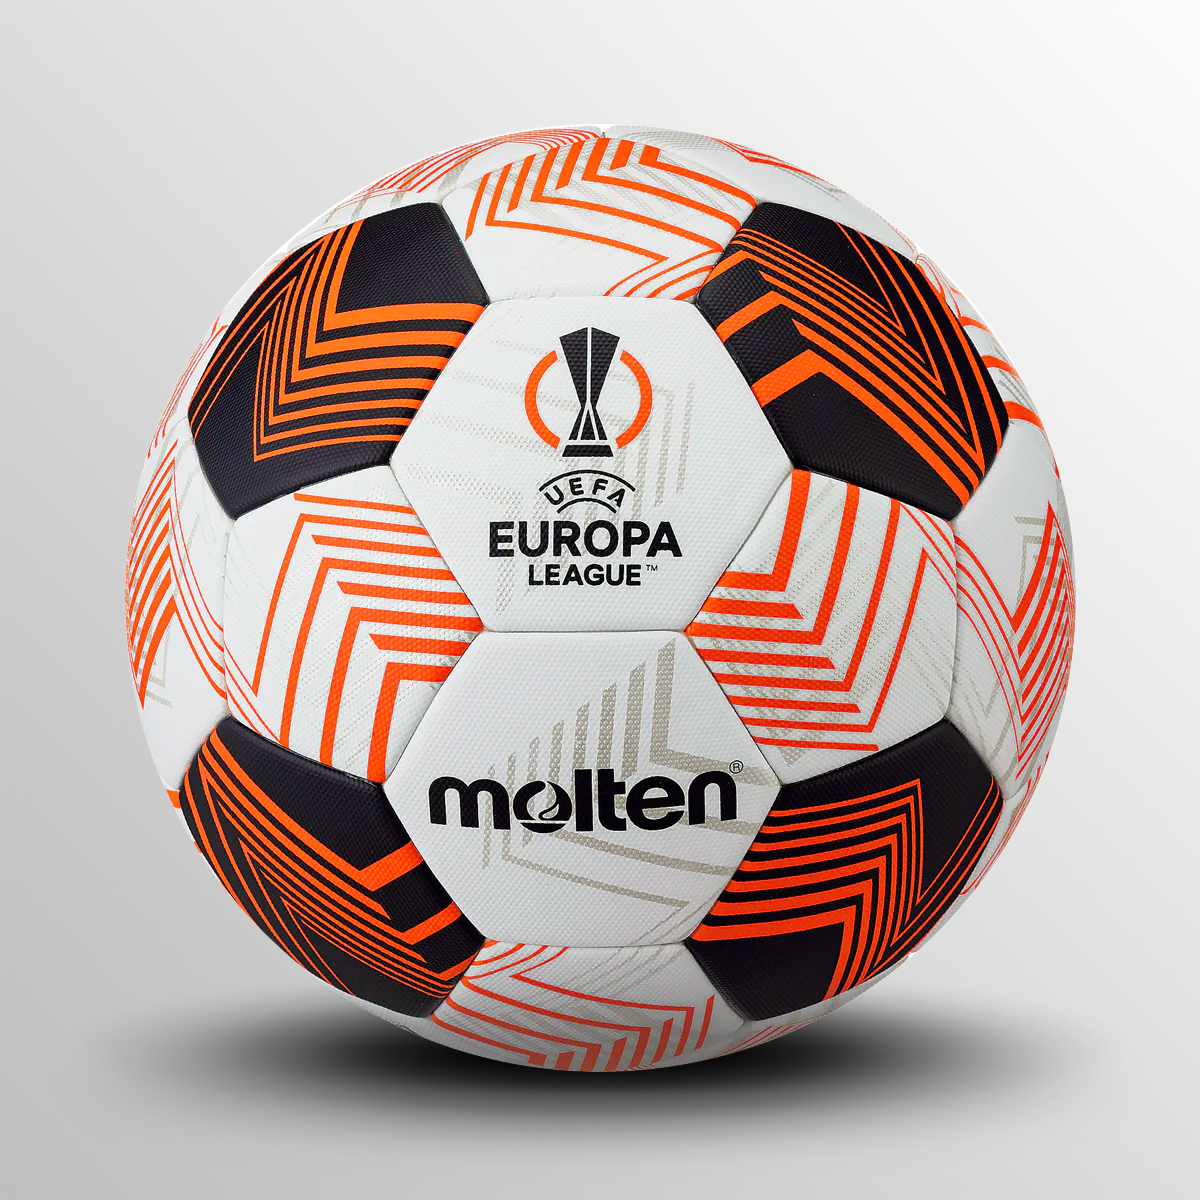 UEFA Europa League 23/24 Match officiel du football